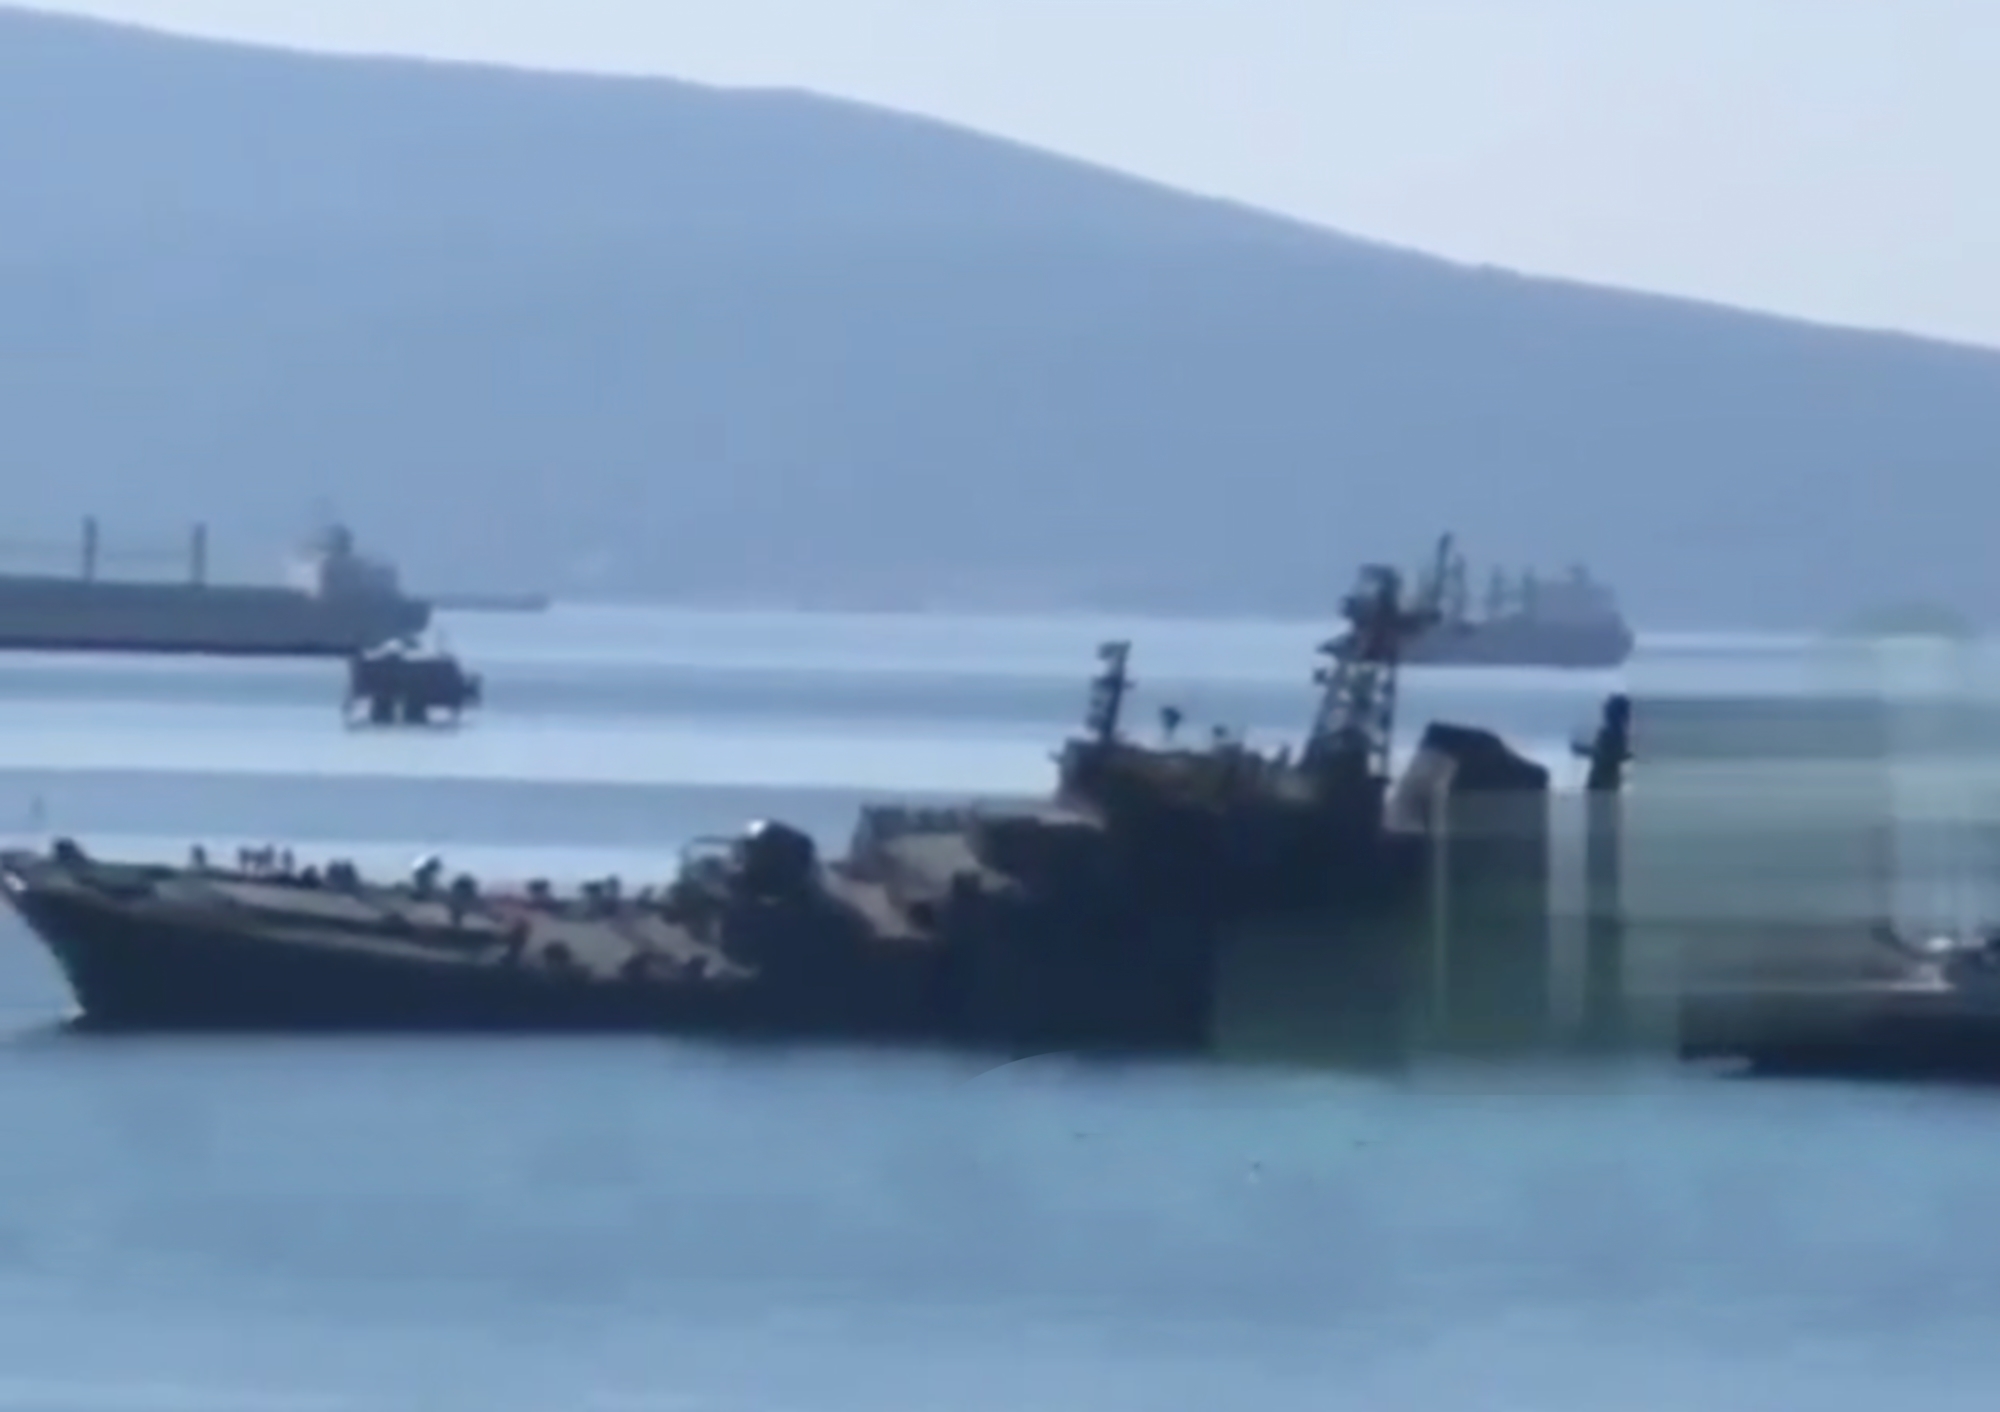 Des drones maritimes ont attaqué la base militaire de la RF à Novorosiysk. L'attaque a endommagé le grand navire de débarquement Olenegorsk Miner.